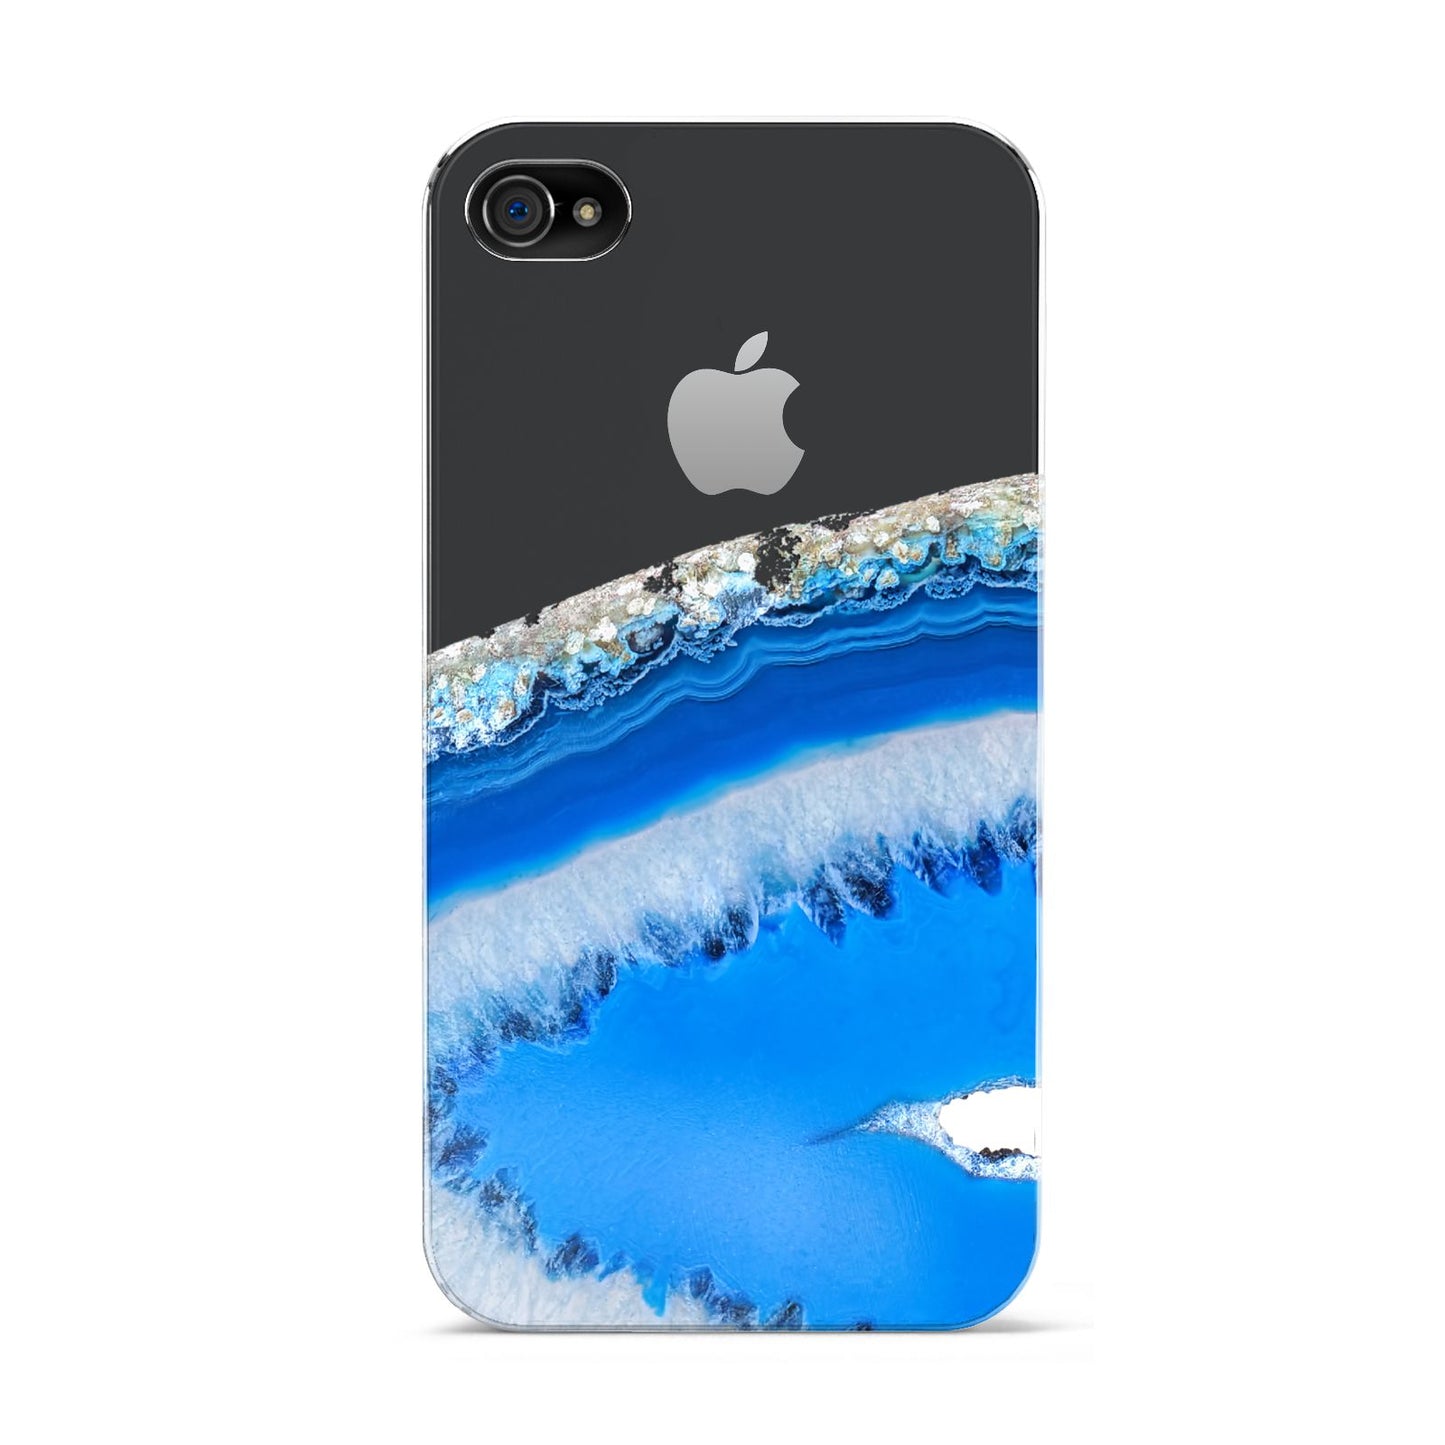 Agate Blue Apple iPhone 4s Case